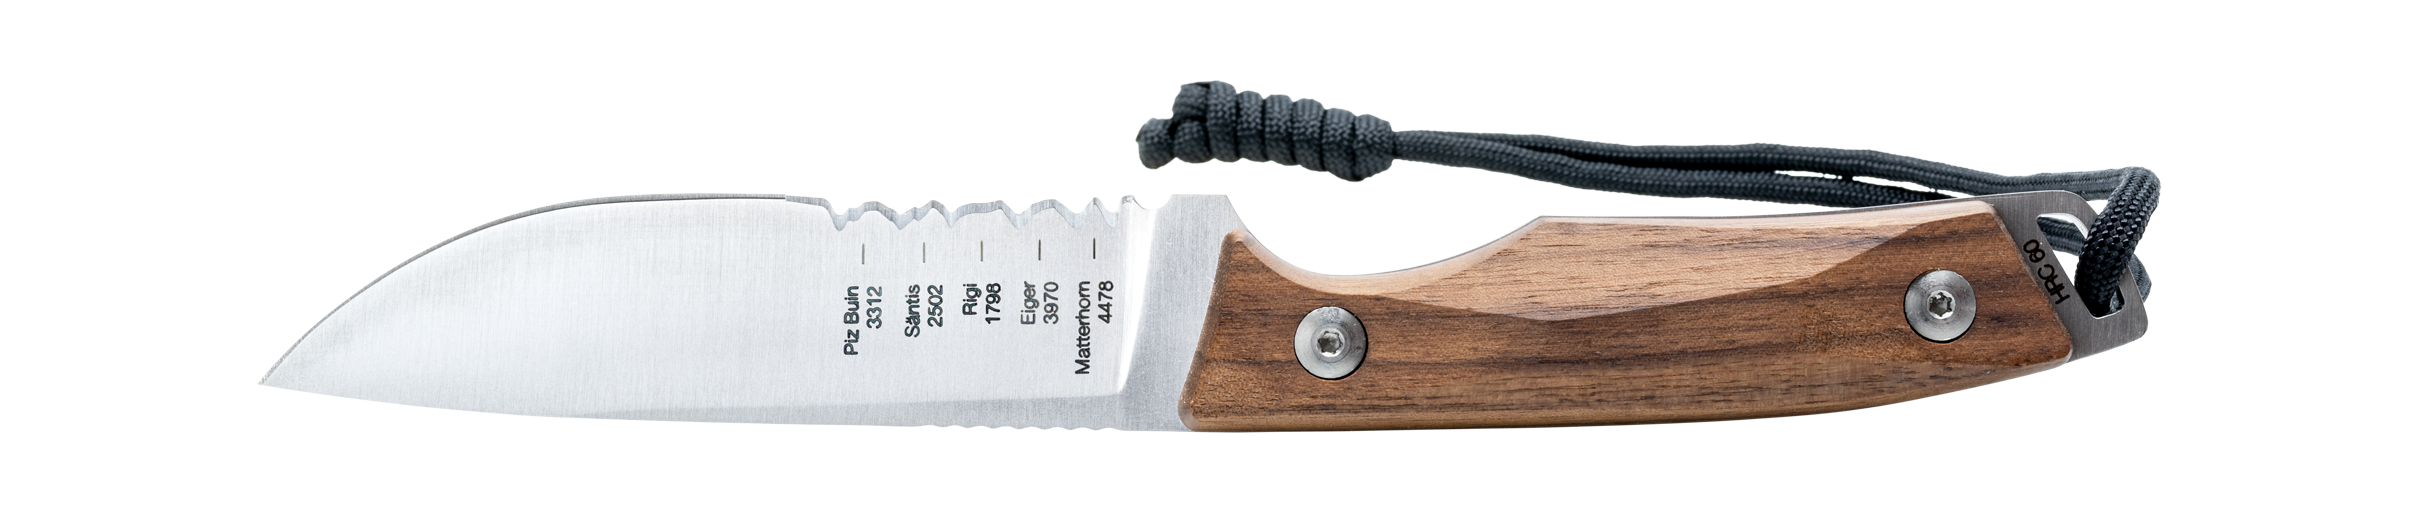 Panorama Bushcraft Knife